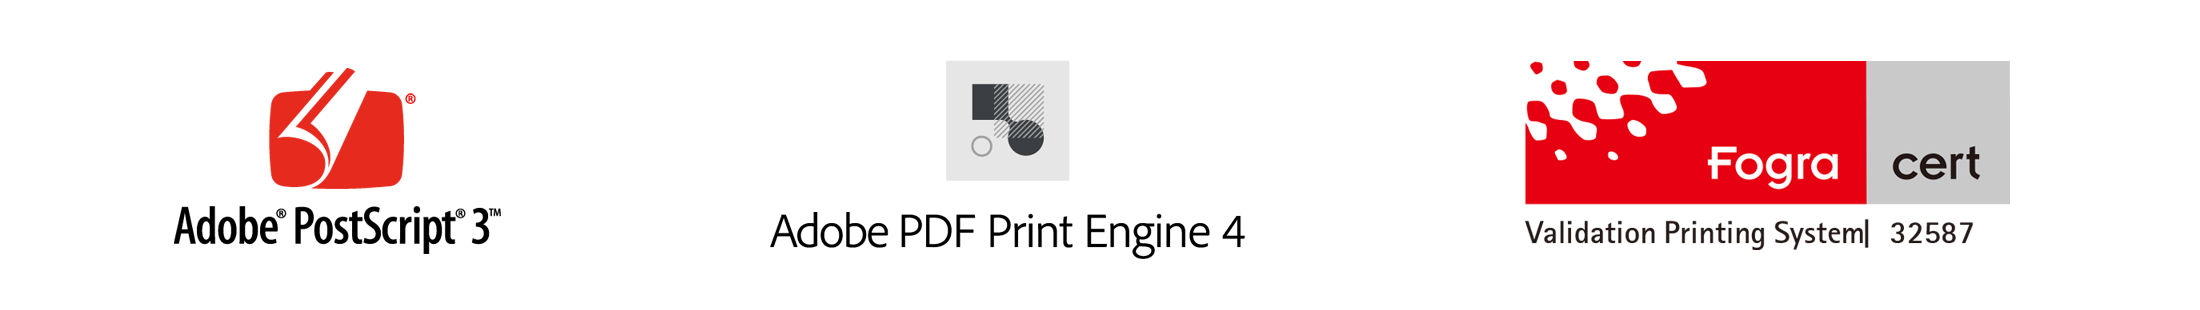 Adobe(R) PostScript(R) 3(TM) / Adobe(R) PDF Print Engine / Fogra logo